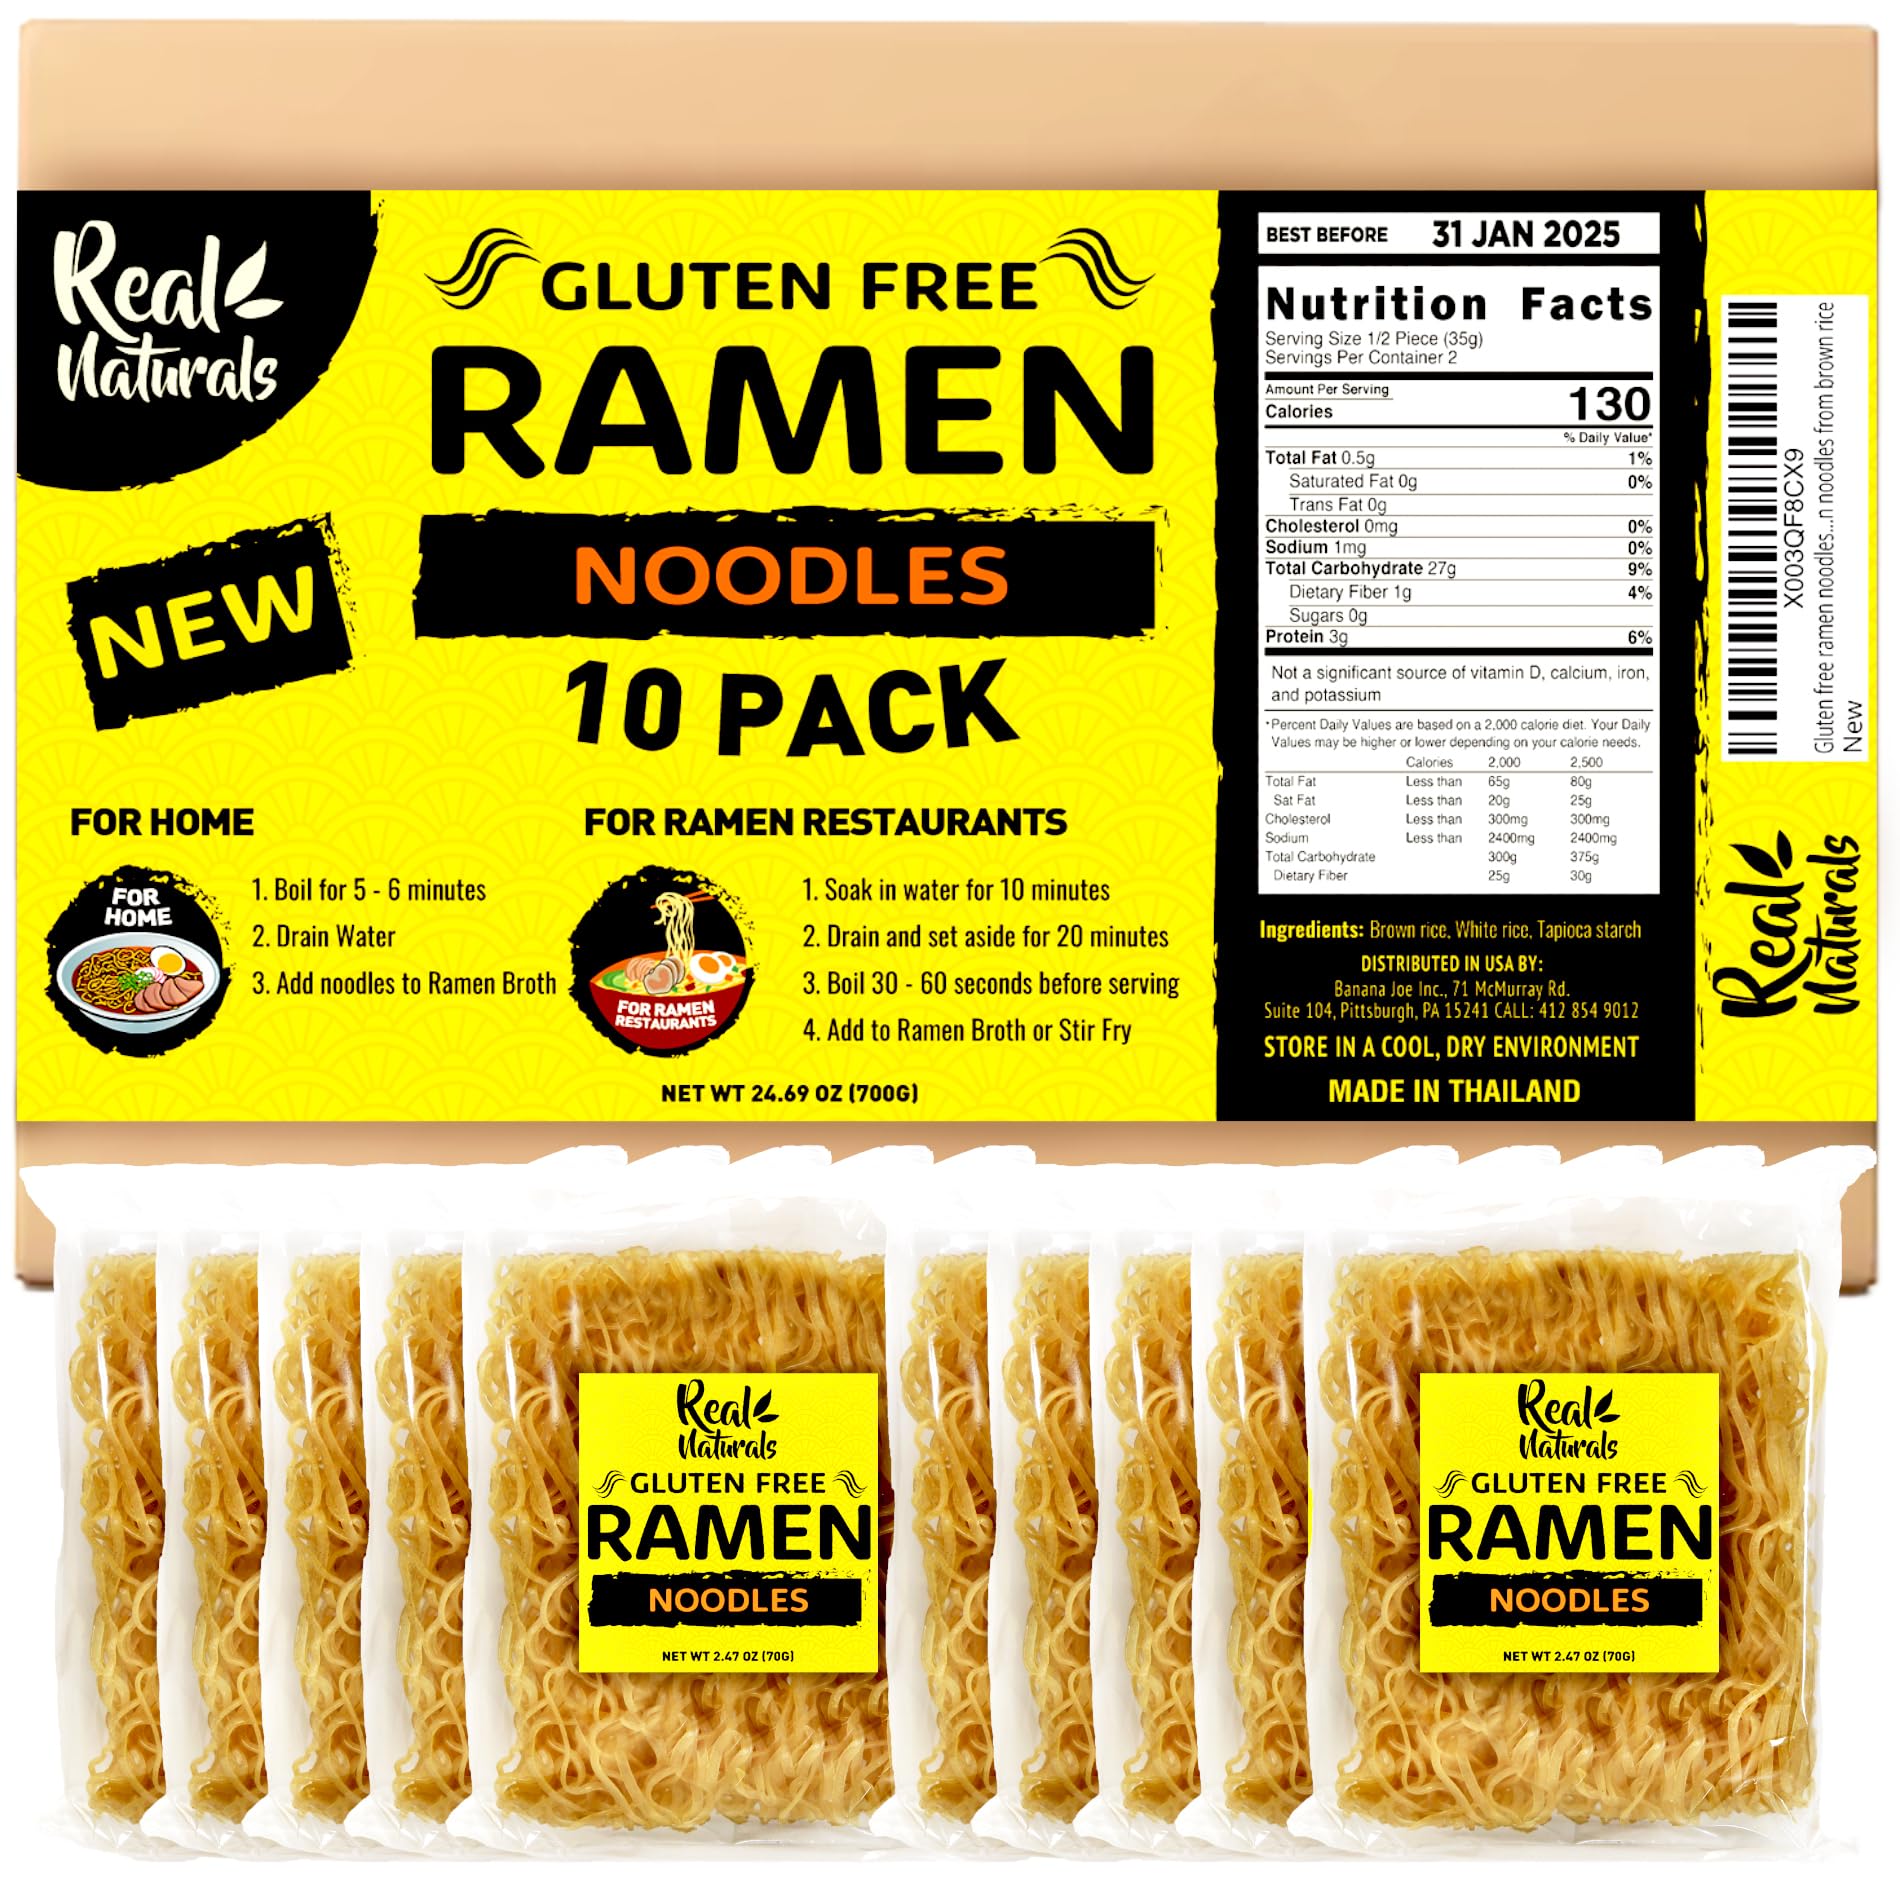 "Brown Rice Ramen Noodles"